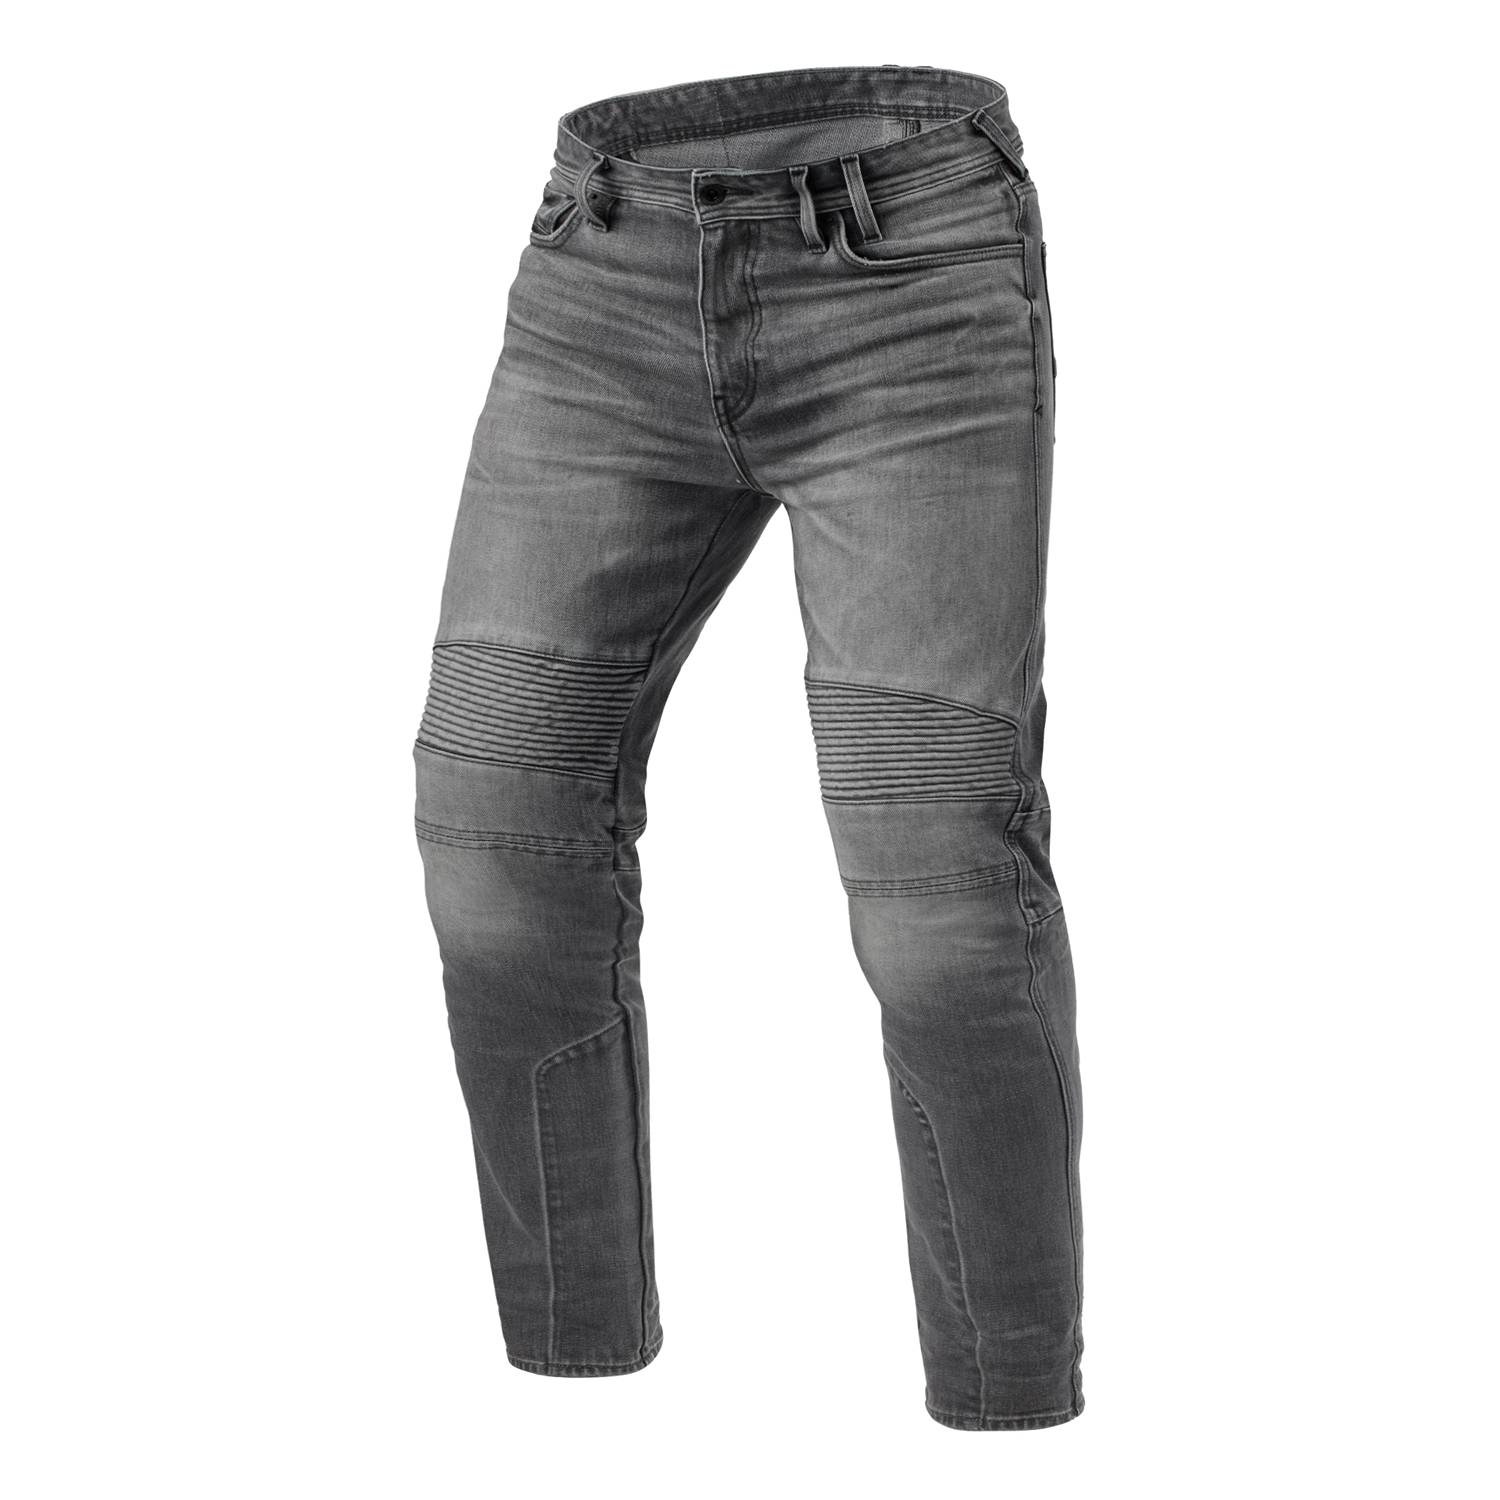 Image of REV'IT! Jeans Moto 2 TF Medium Grey Used L36 Motorcycle Jeans Größe L36/W30